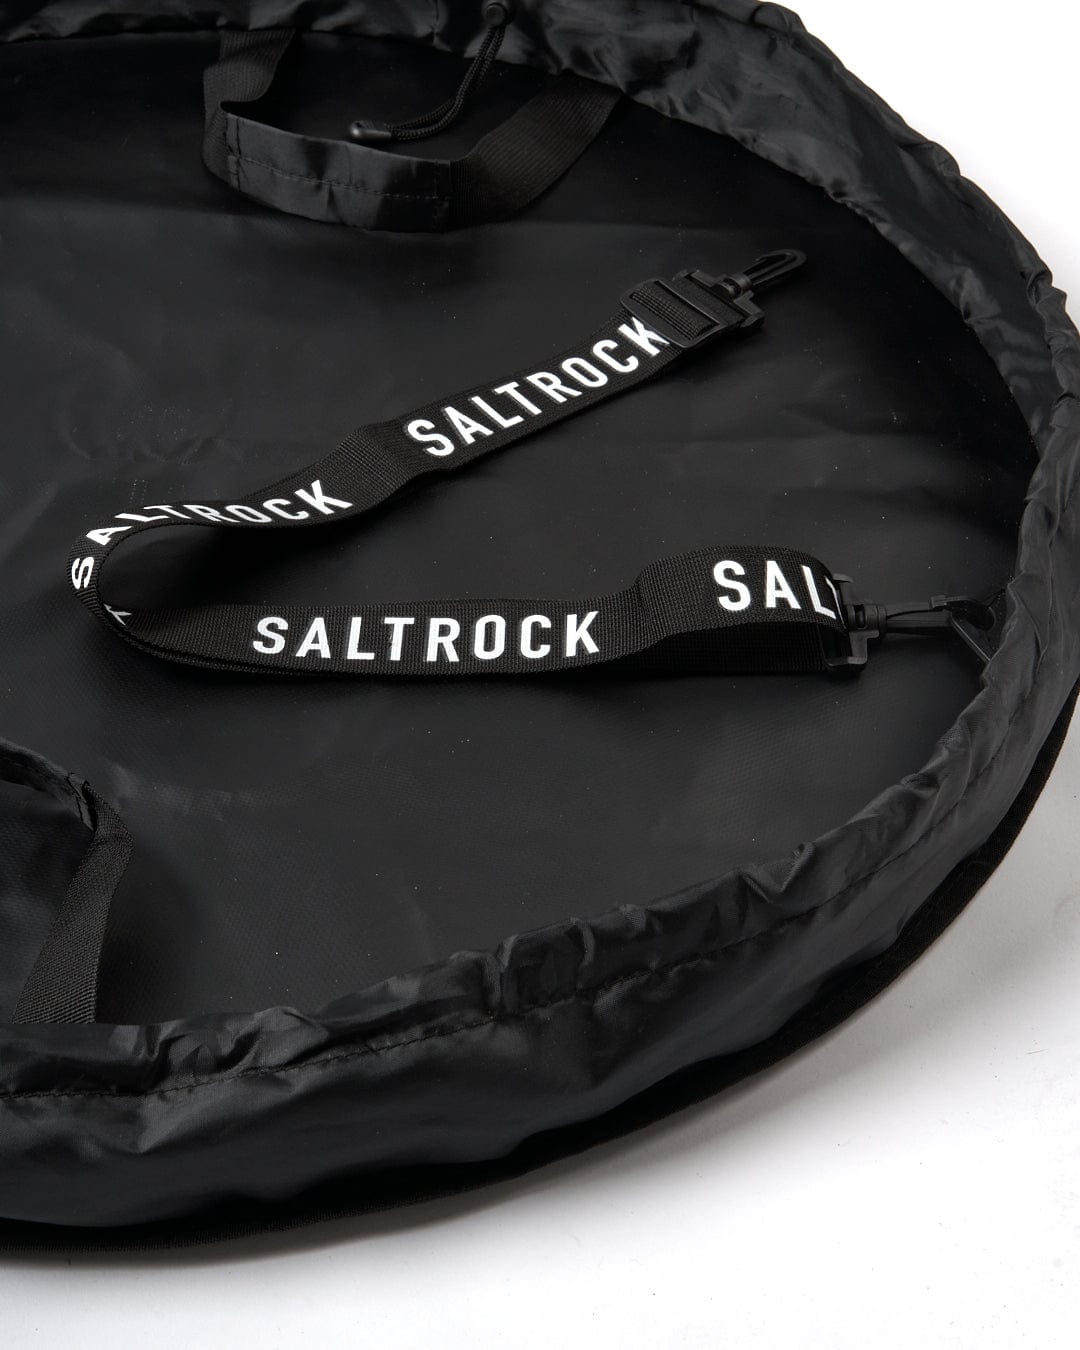 A Saltrock black lightweight bag with a strap.